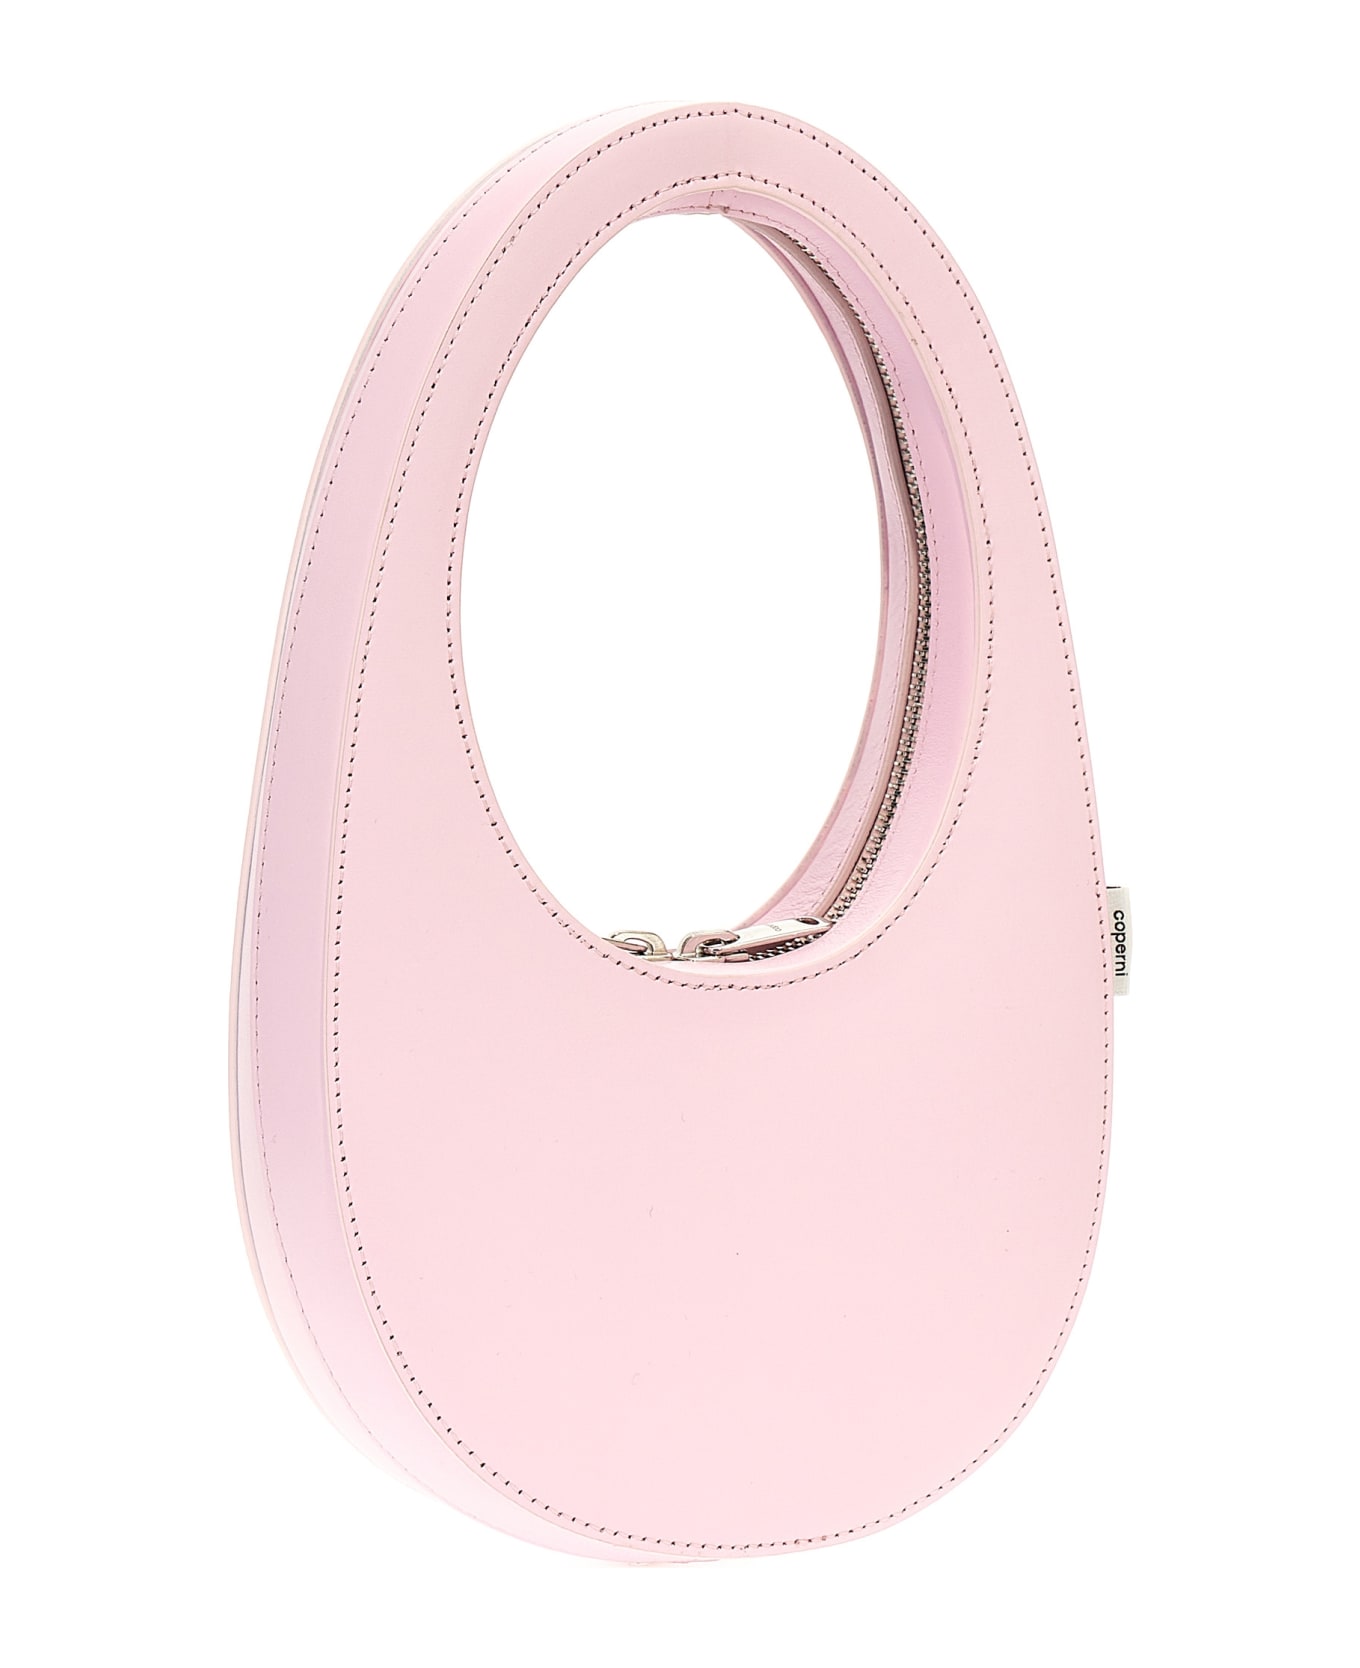 Coperni 'mini Swipe Bag' Handbag - Pink トートバッグ